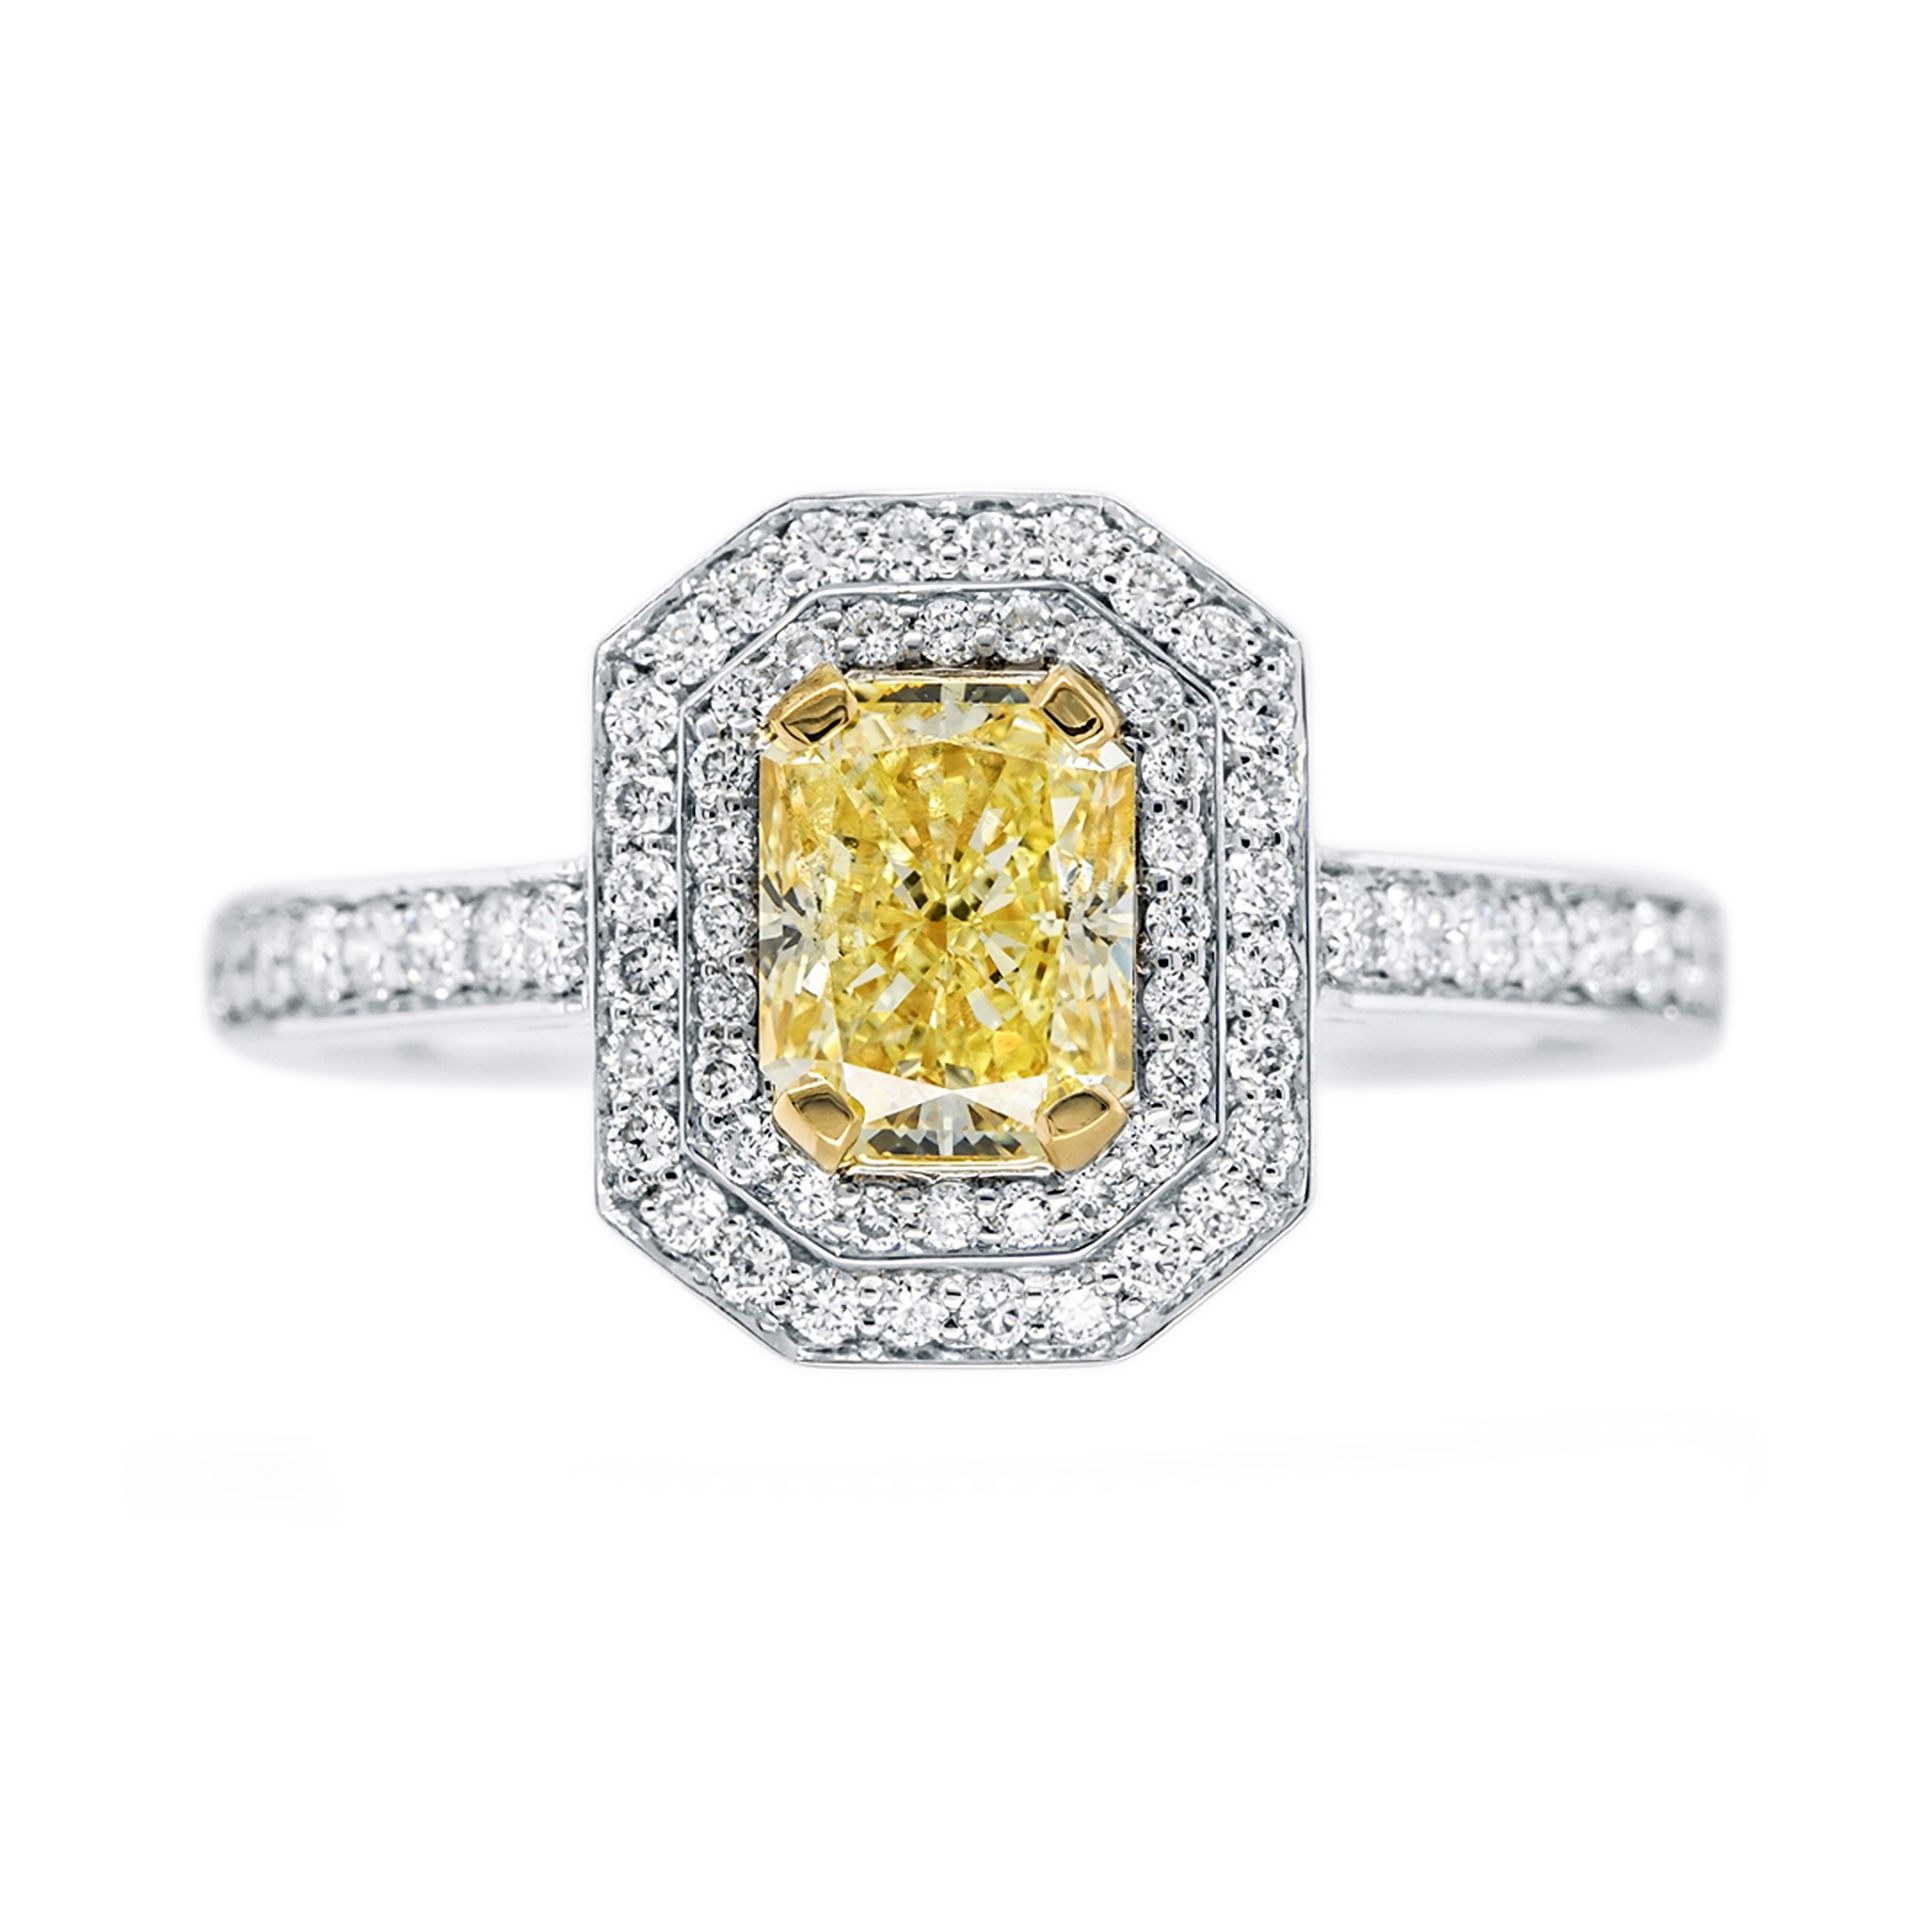 Verlobungsring Platin und 18 Karat Gelbgold | Engagement Ring Platinum and 18 Karat Yellow Gold - Image 3 of 3